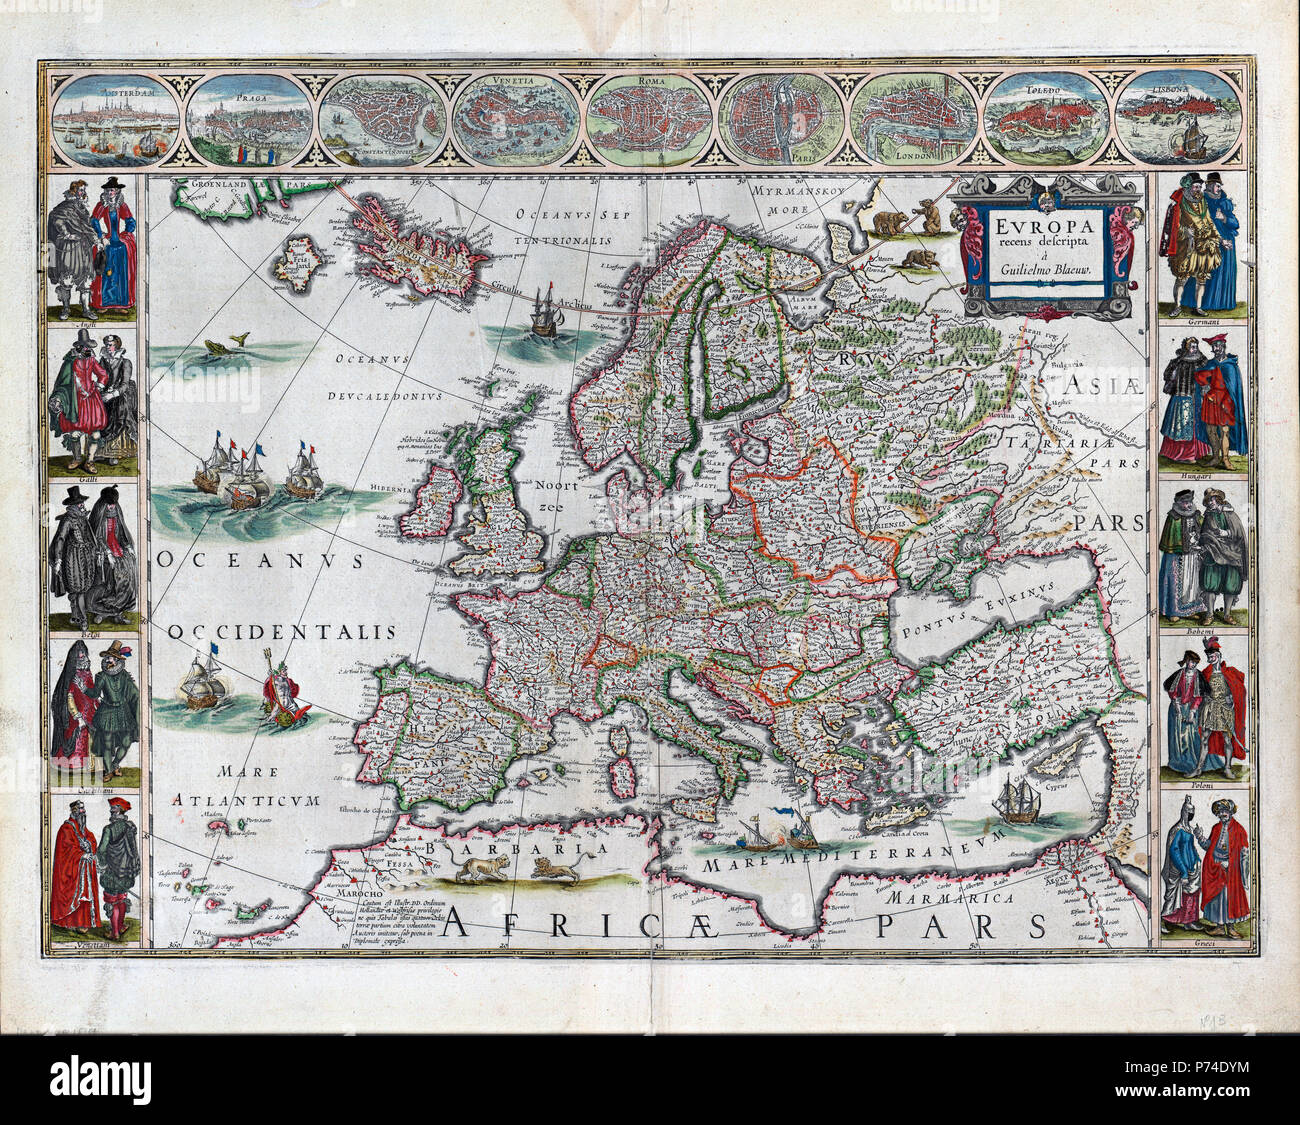 Blaeus europakart, 1635 - Cartographer Guilielmo Blaeuw (Willem Blaeu) Banque D'Images